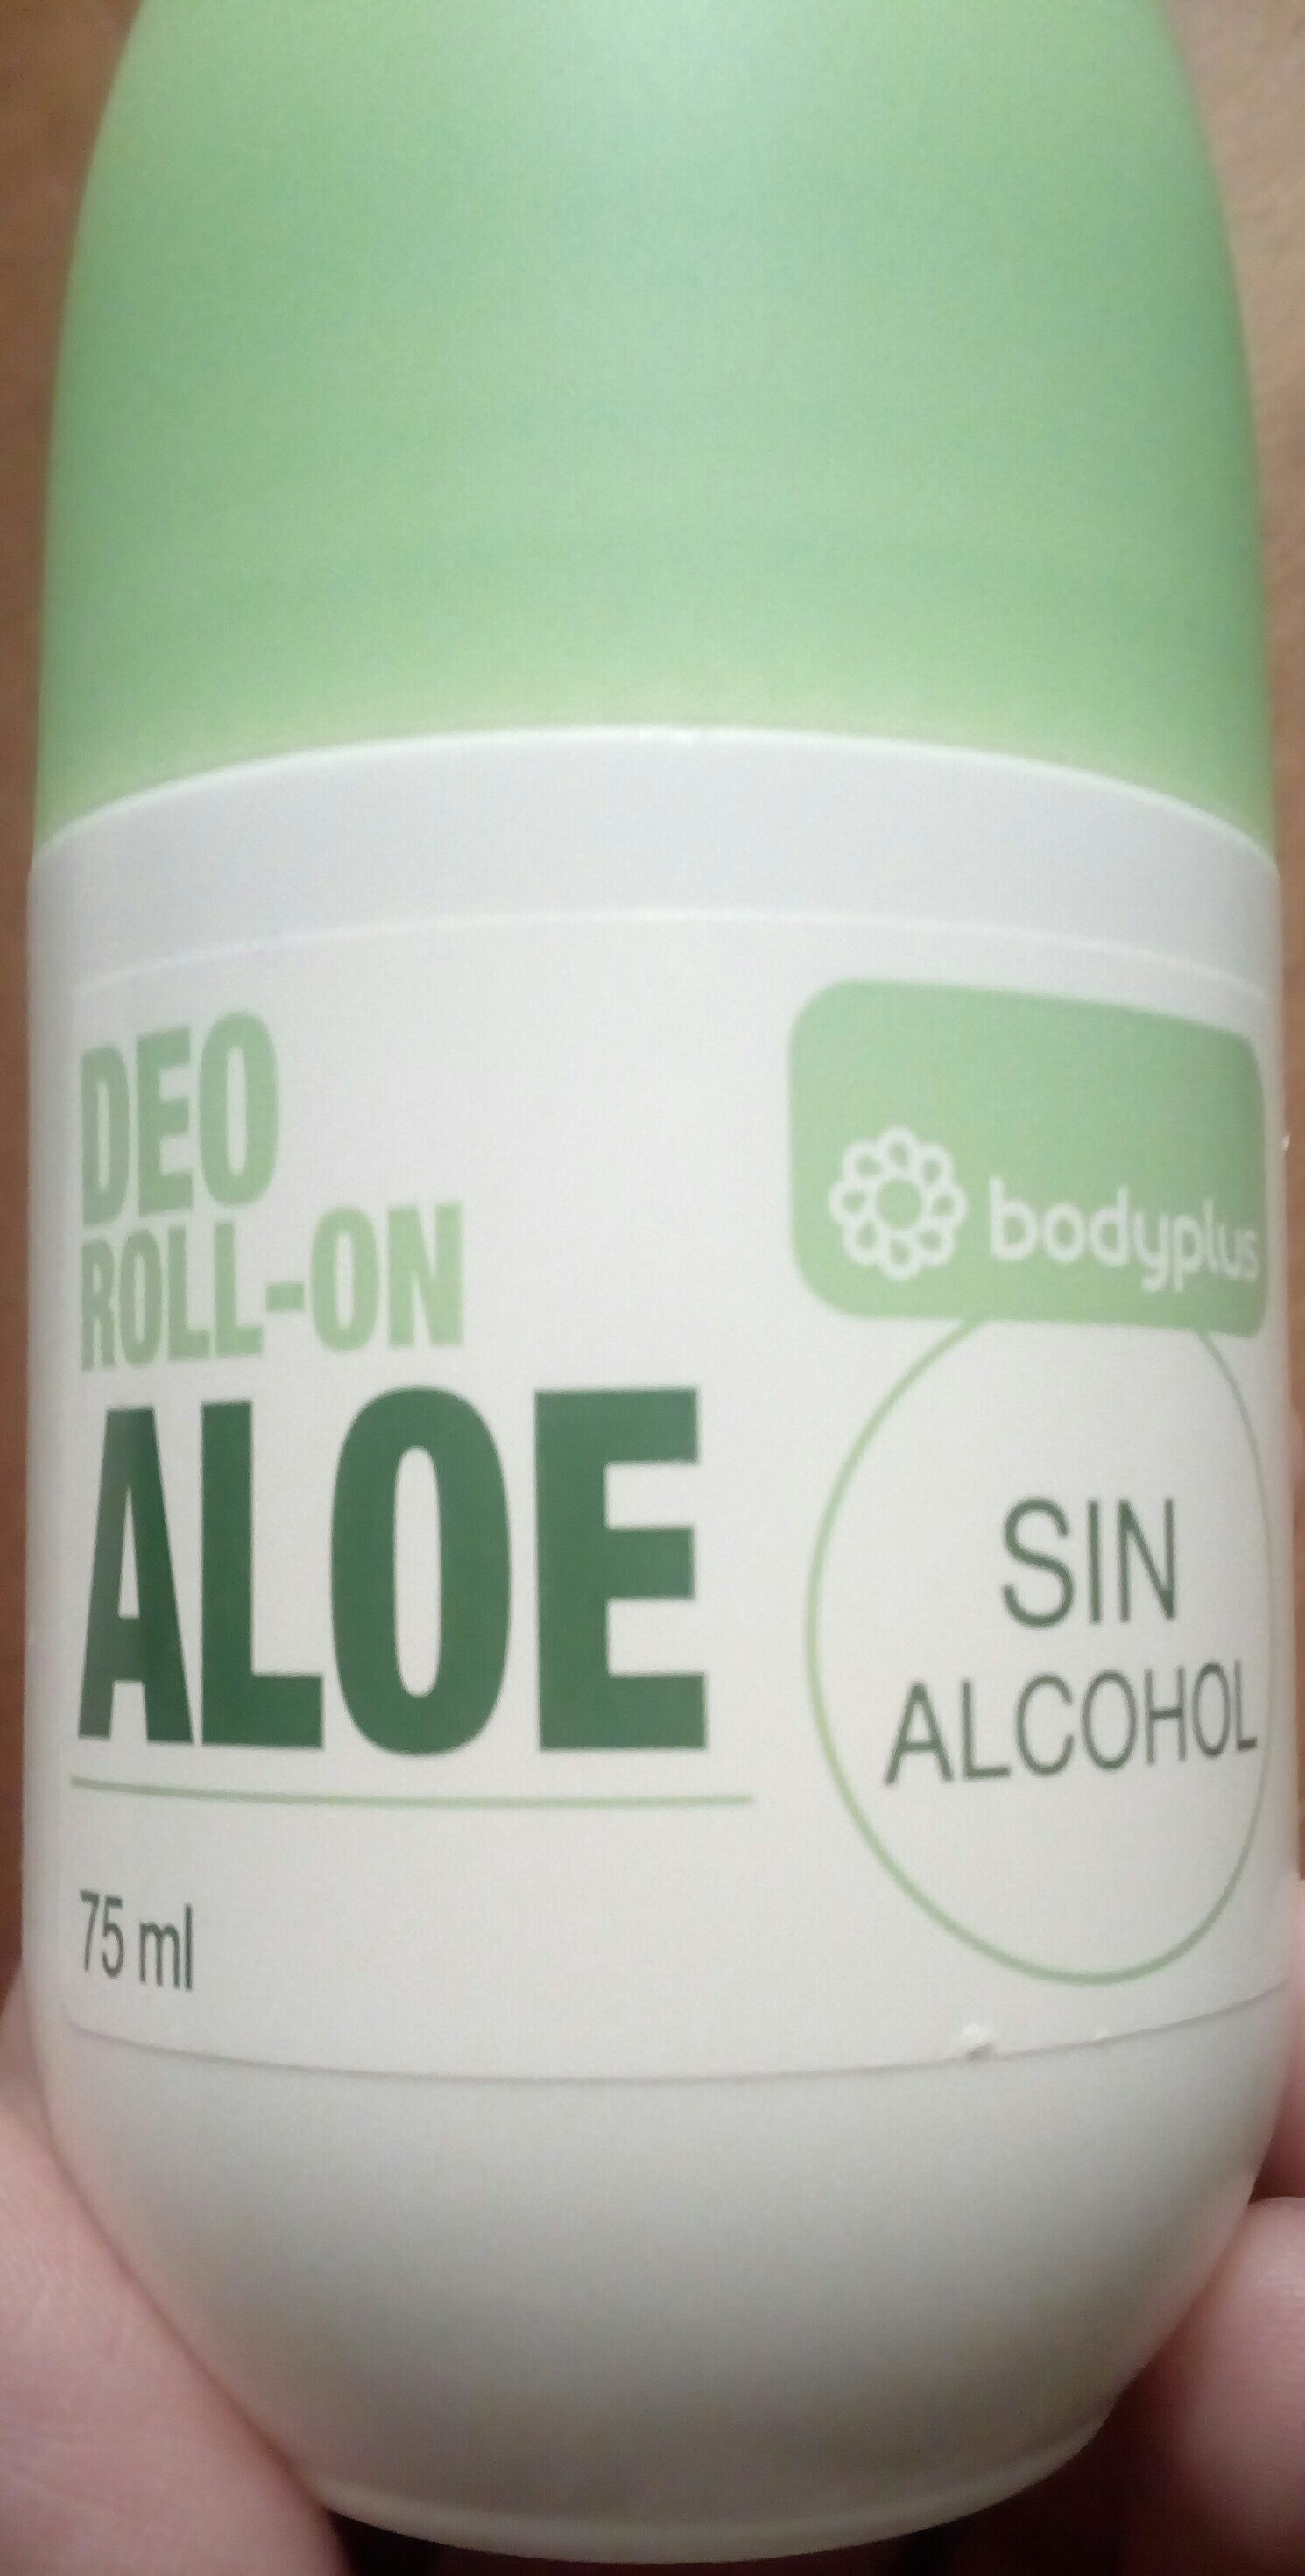 Deo Roll-on Aloe Vera - Produit - es